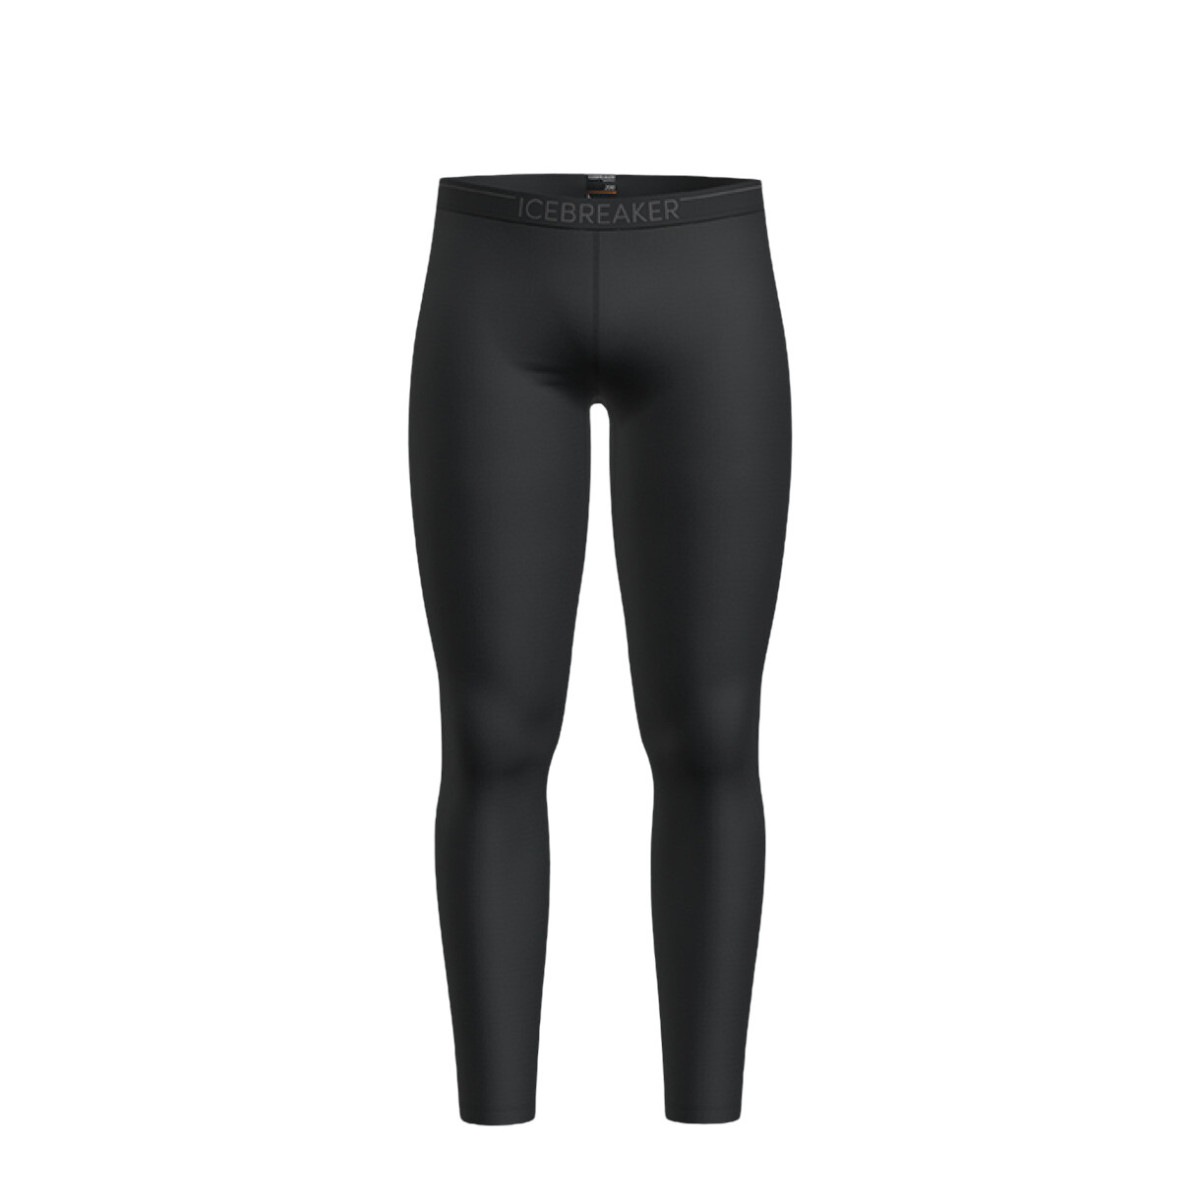  M Mer 200 Oasis Leggings First Snow BLACK/LODEN/AOP - men's  leggings - ICEBREAKER - 97.68 € - outdoorové oblečení a vybavení shop